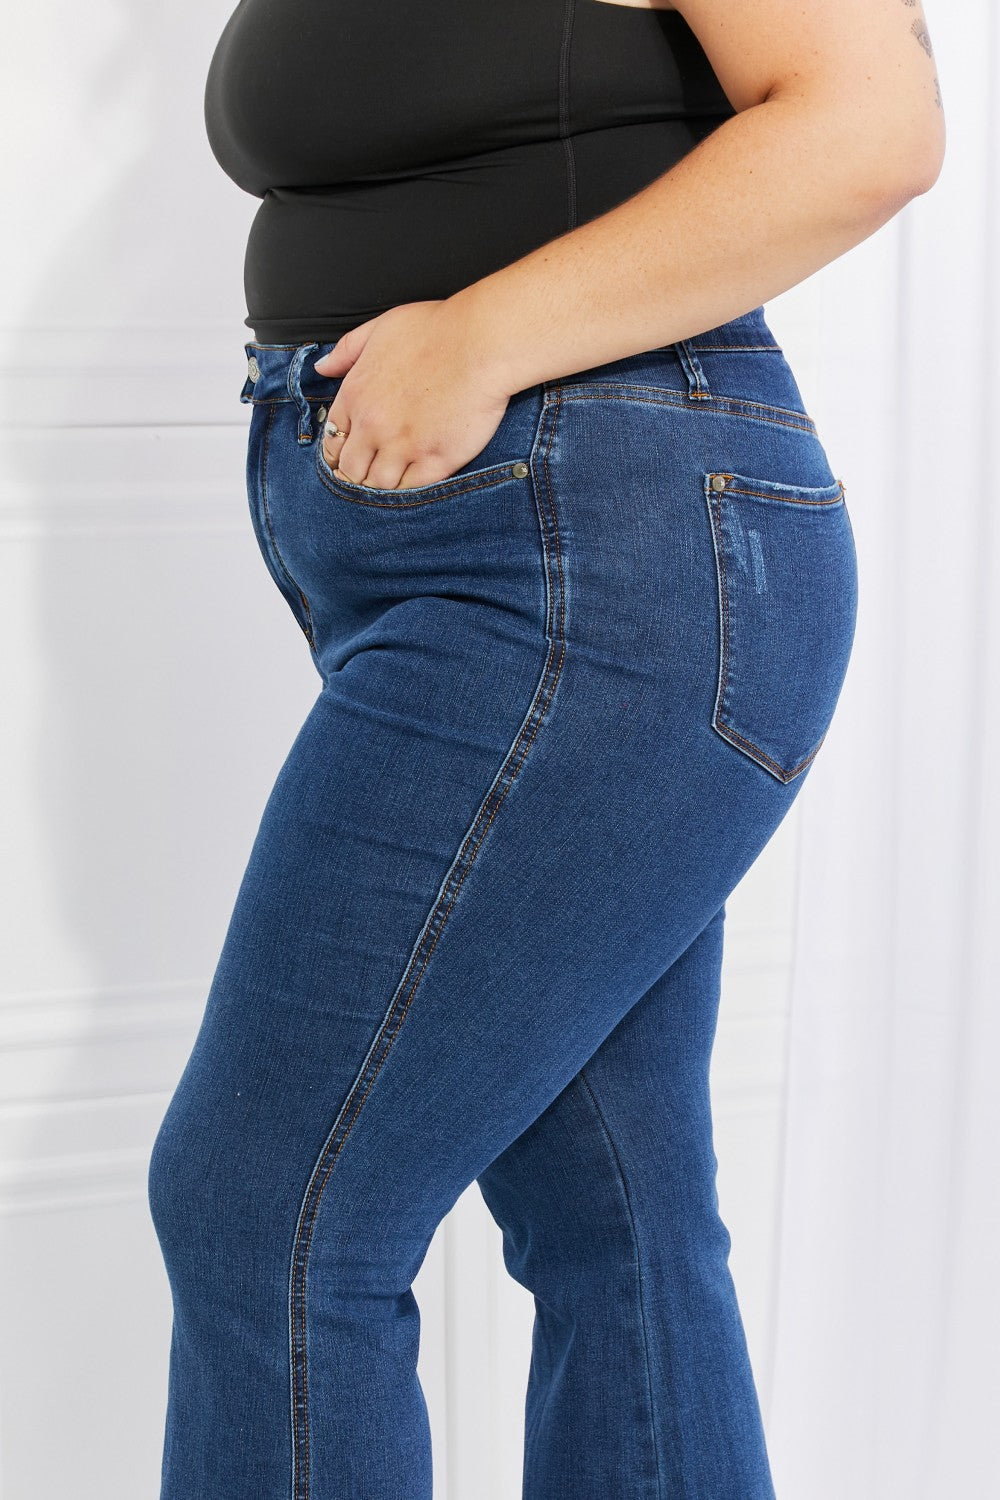 Judy Blue Ava Full Size COOL DENIM ™️ Tummy Control Flare